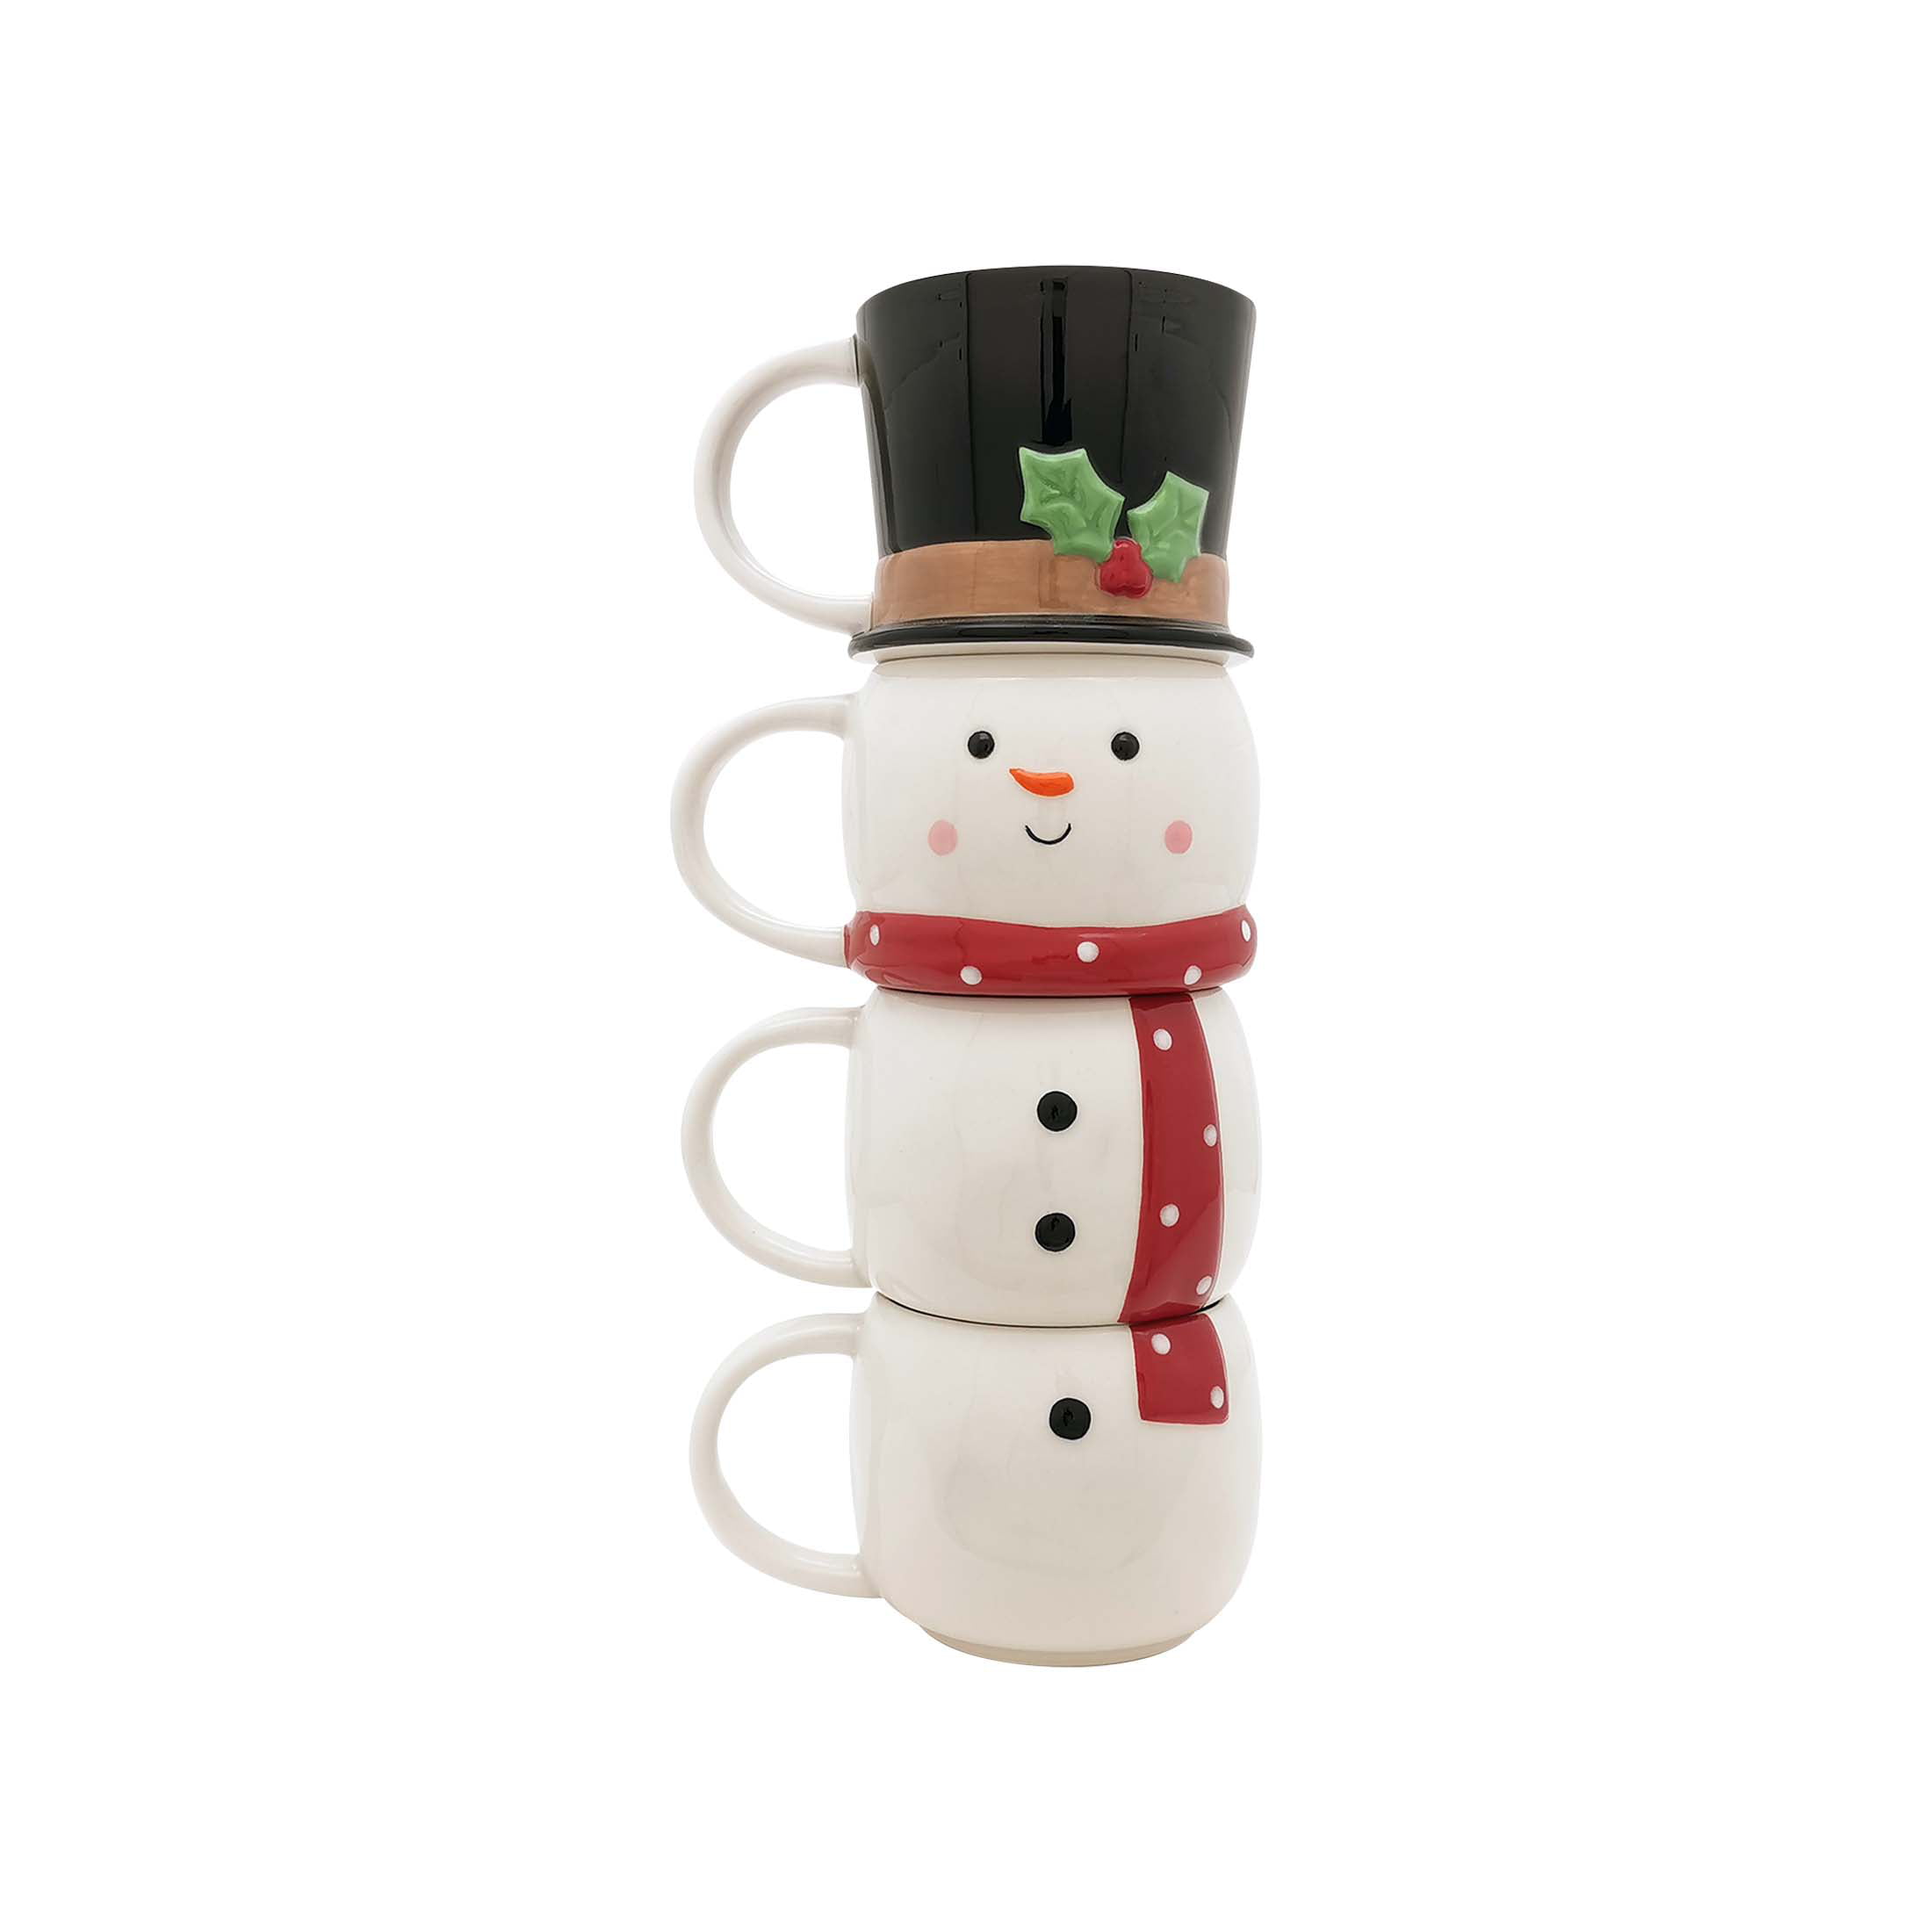 Wholesale 401-500ml Cute Santa Snowman Decorated Ceramic Mug Tableware